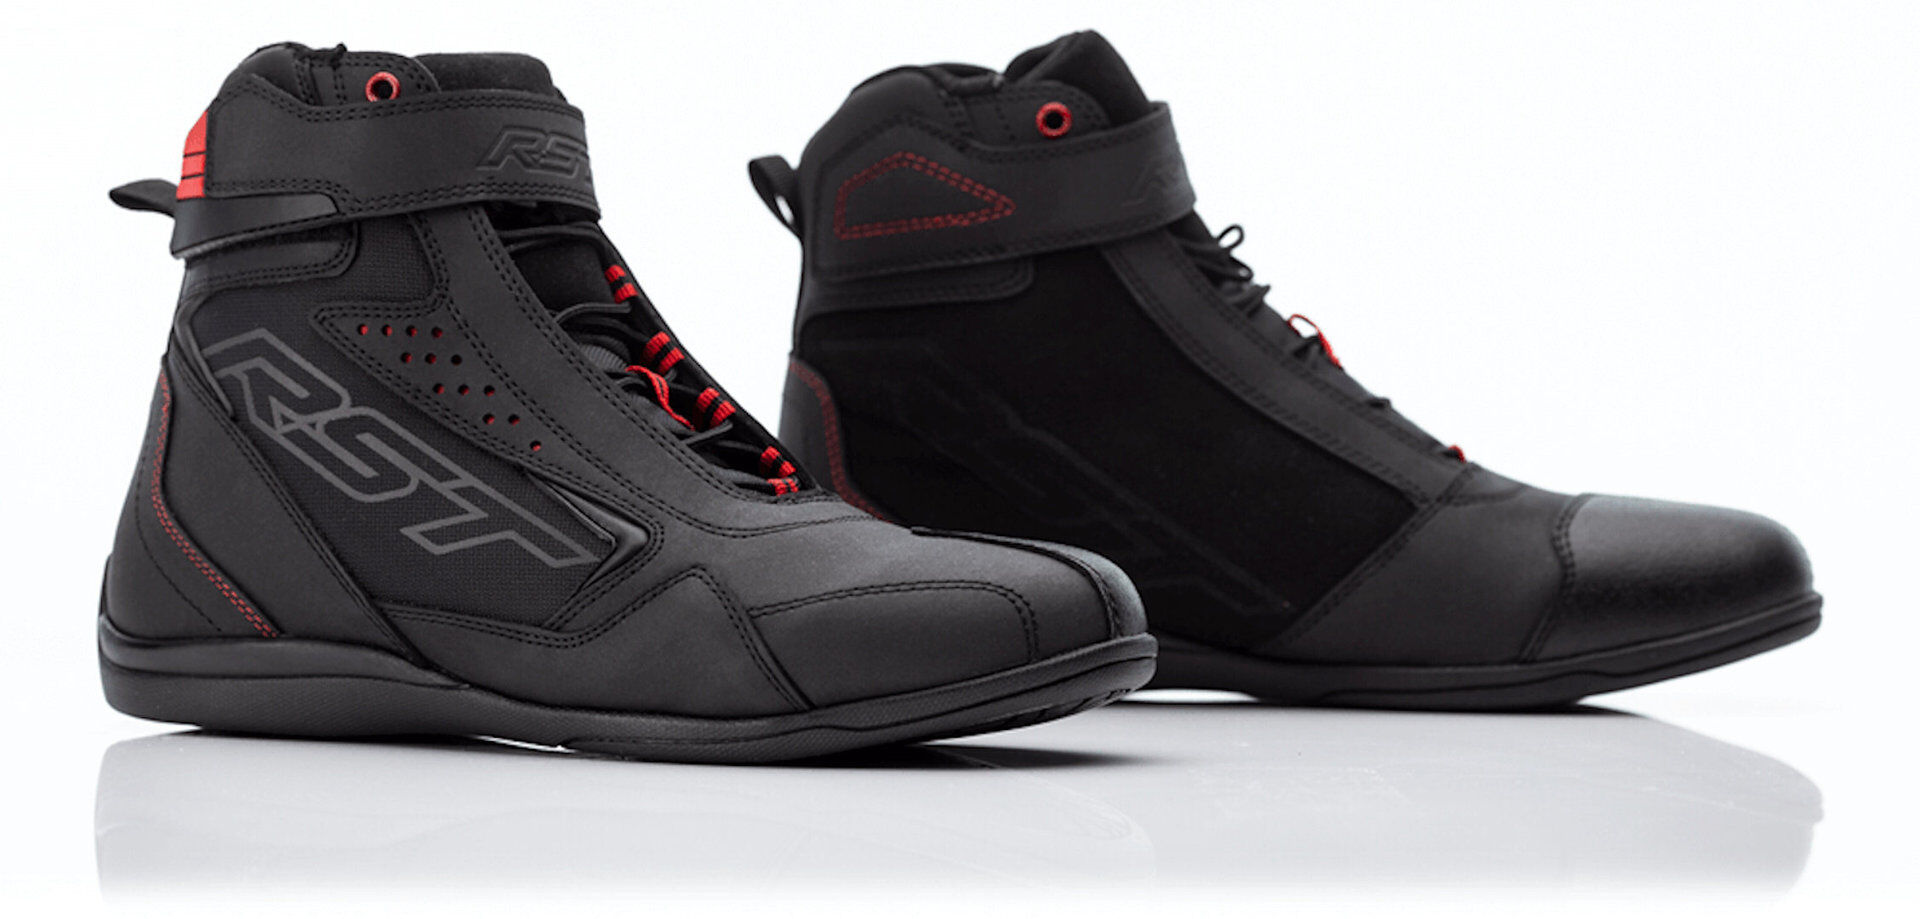 RST Frontier Zapatos de motocicleta para mujer - Negro Rojo (36)